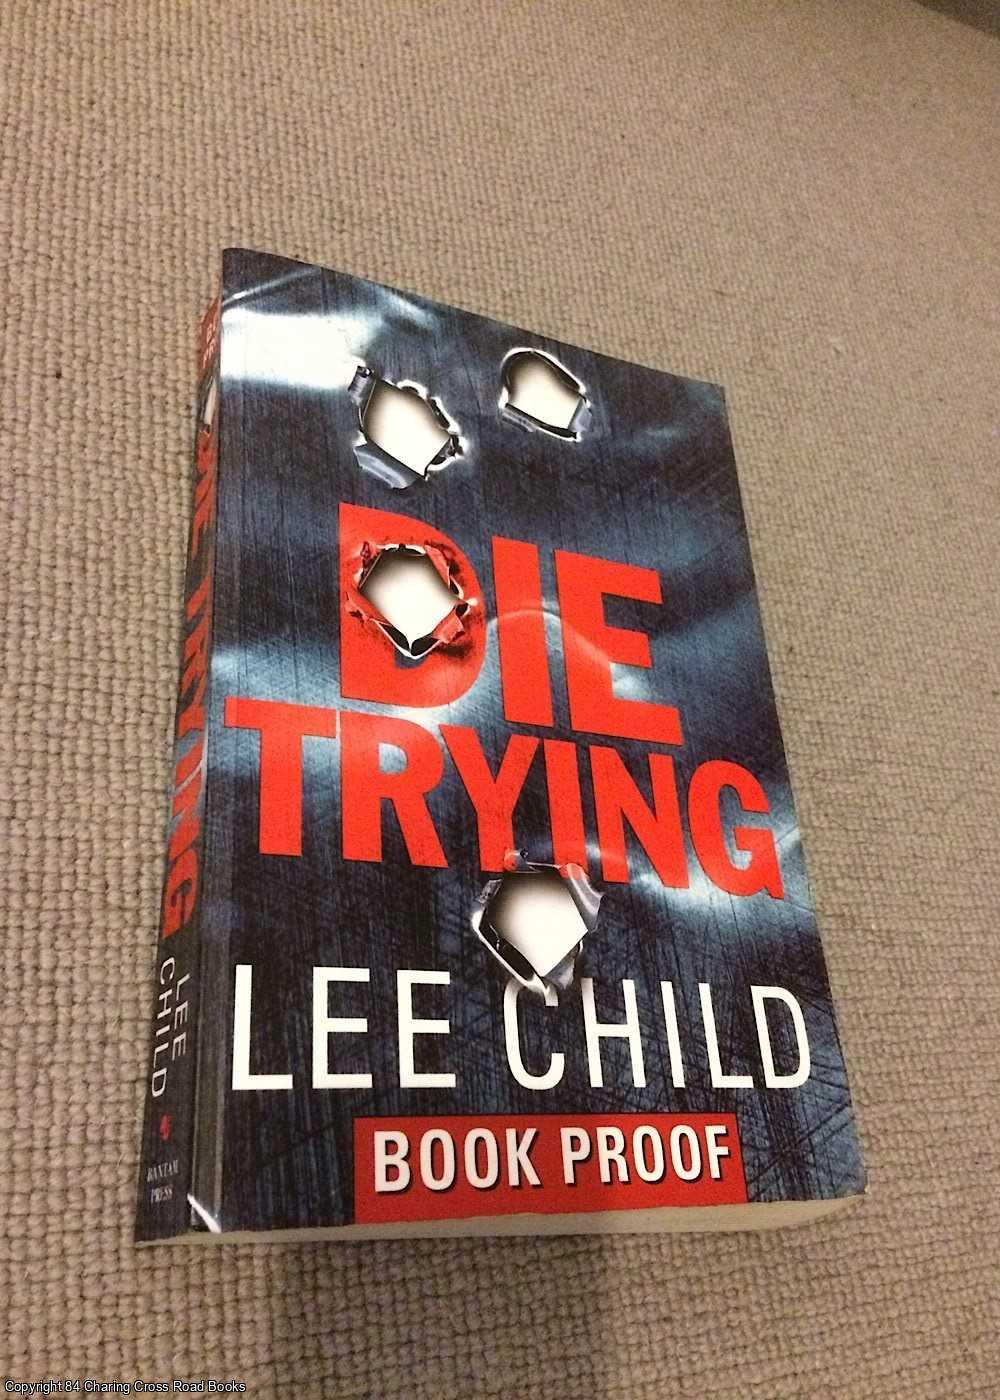 Child, Lee - Die Trying